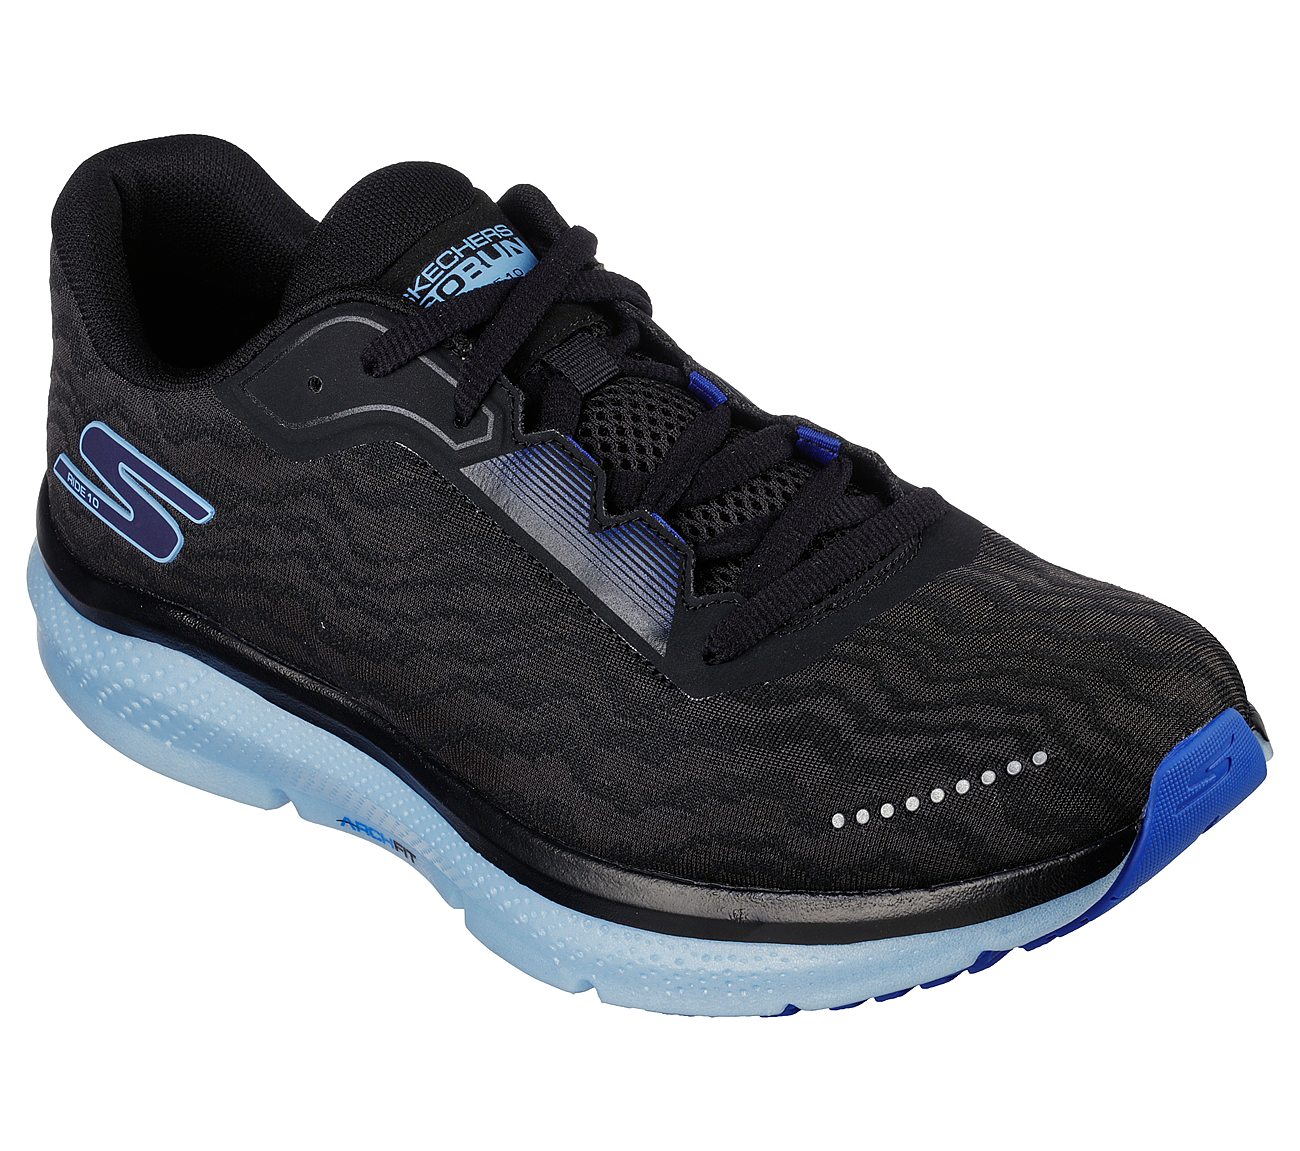 GO RUN RIDE 10, BLACK/LIGHT BLUE Footwear Right View